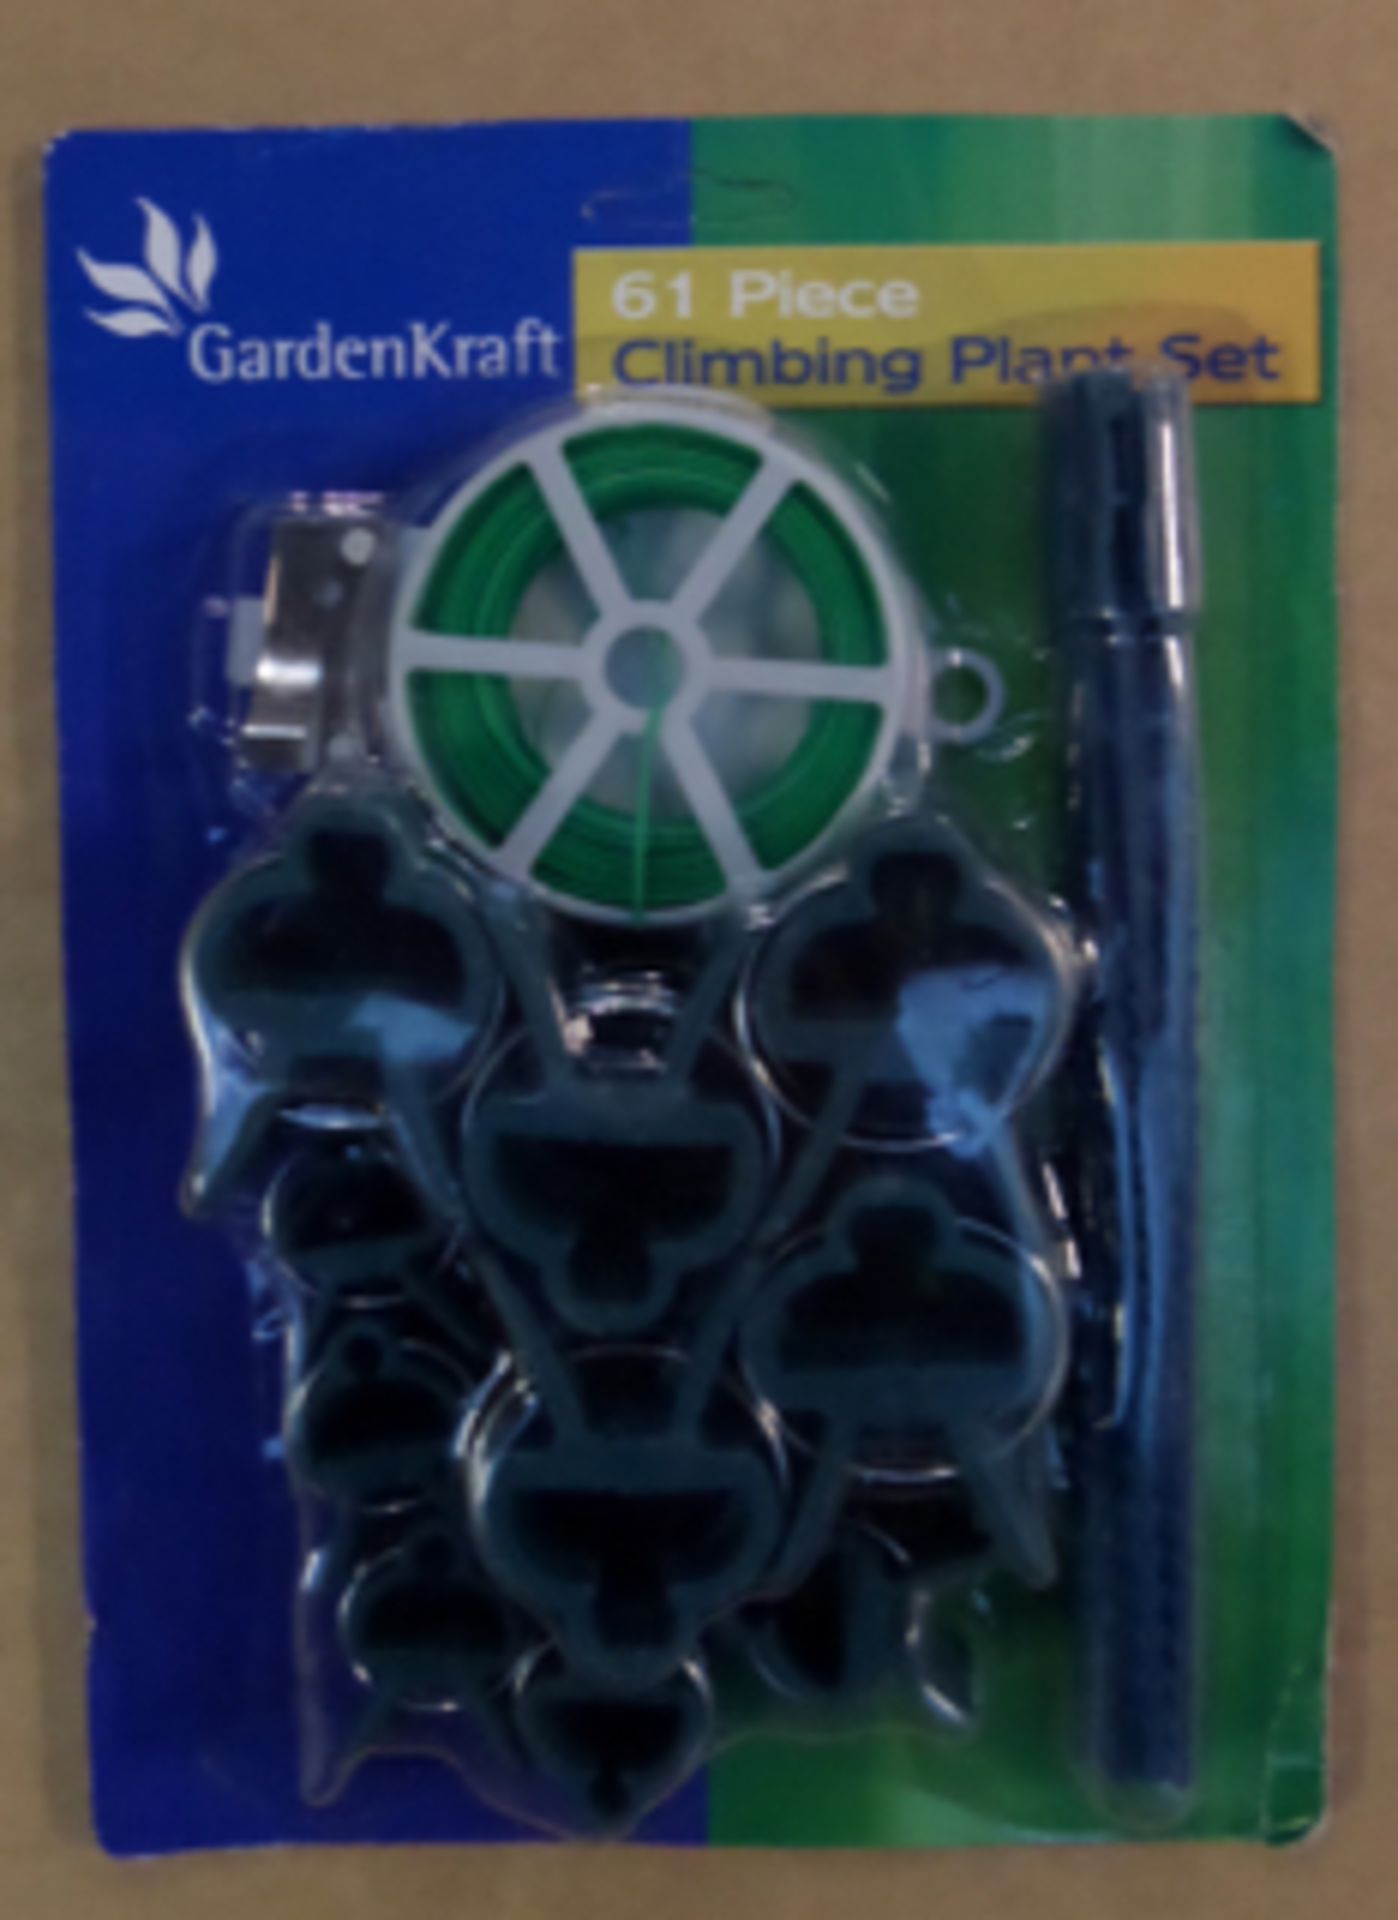 10 x Garden Kraft 61 Piece Climbing plant sets. Incl: 20 x Plant ties, 20 x Large plant clips, 20